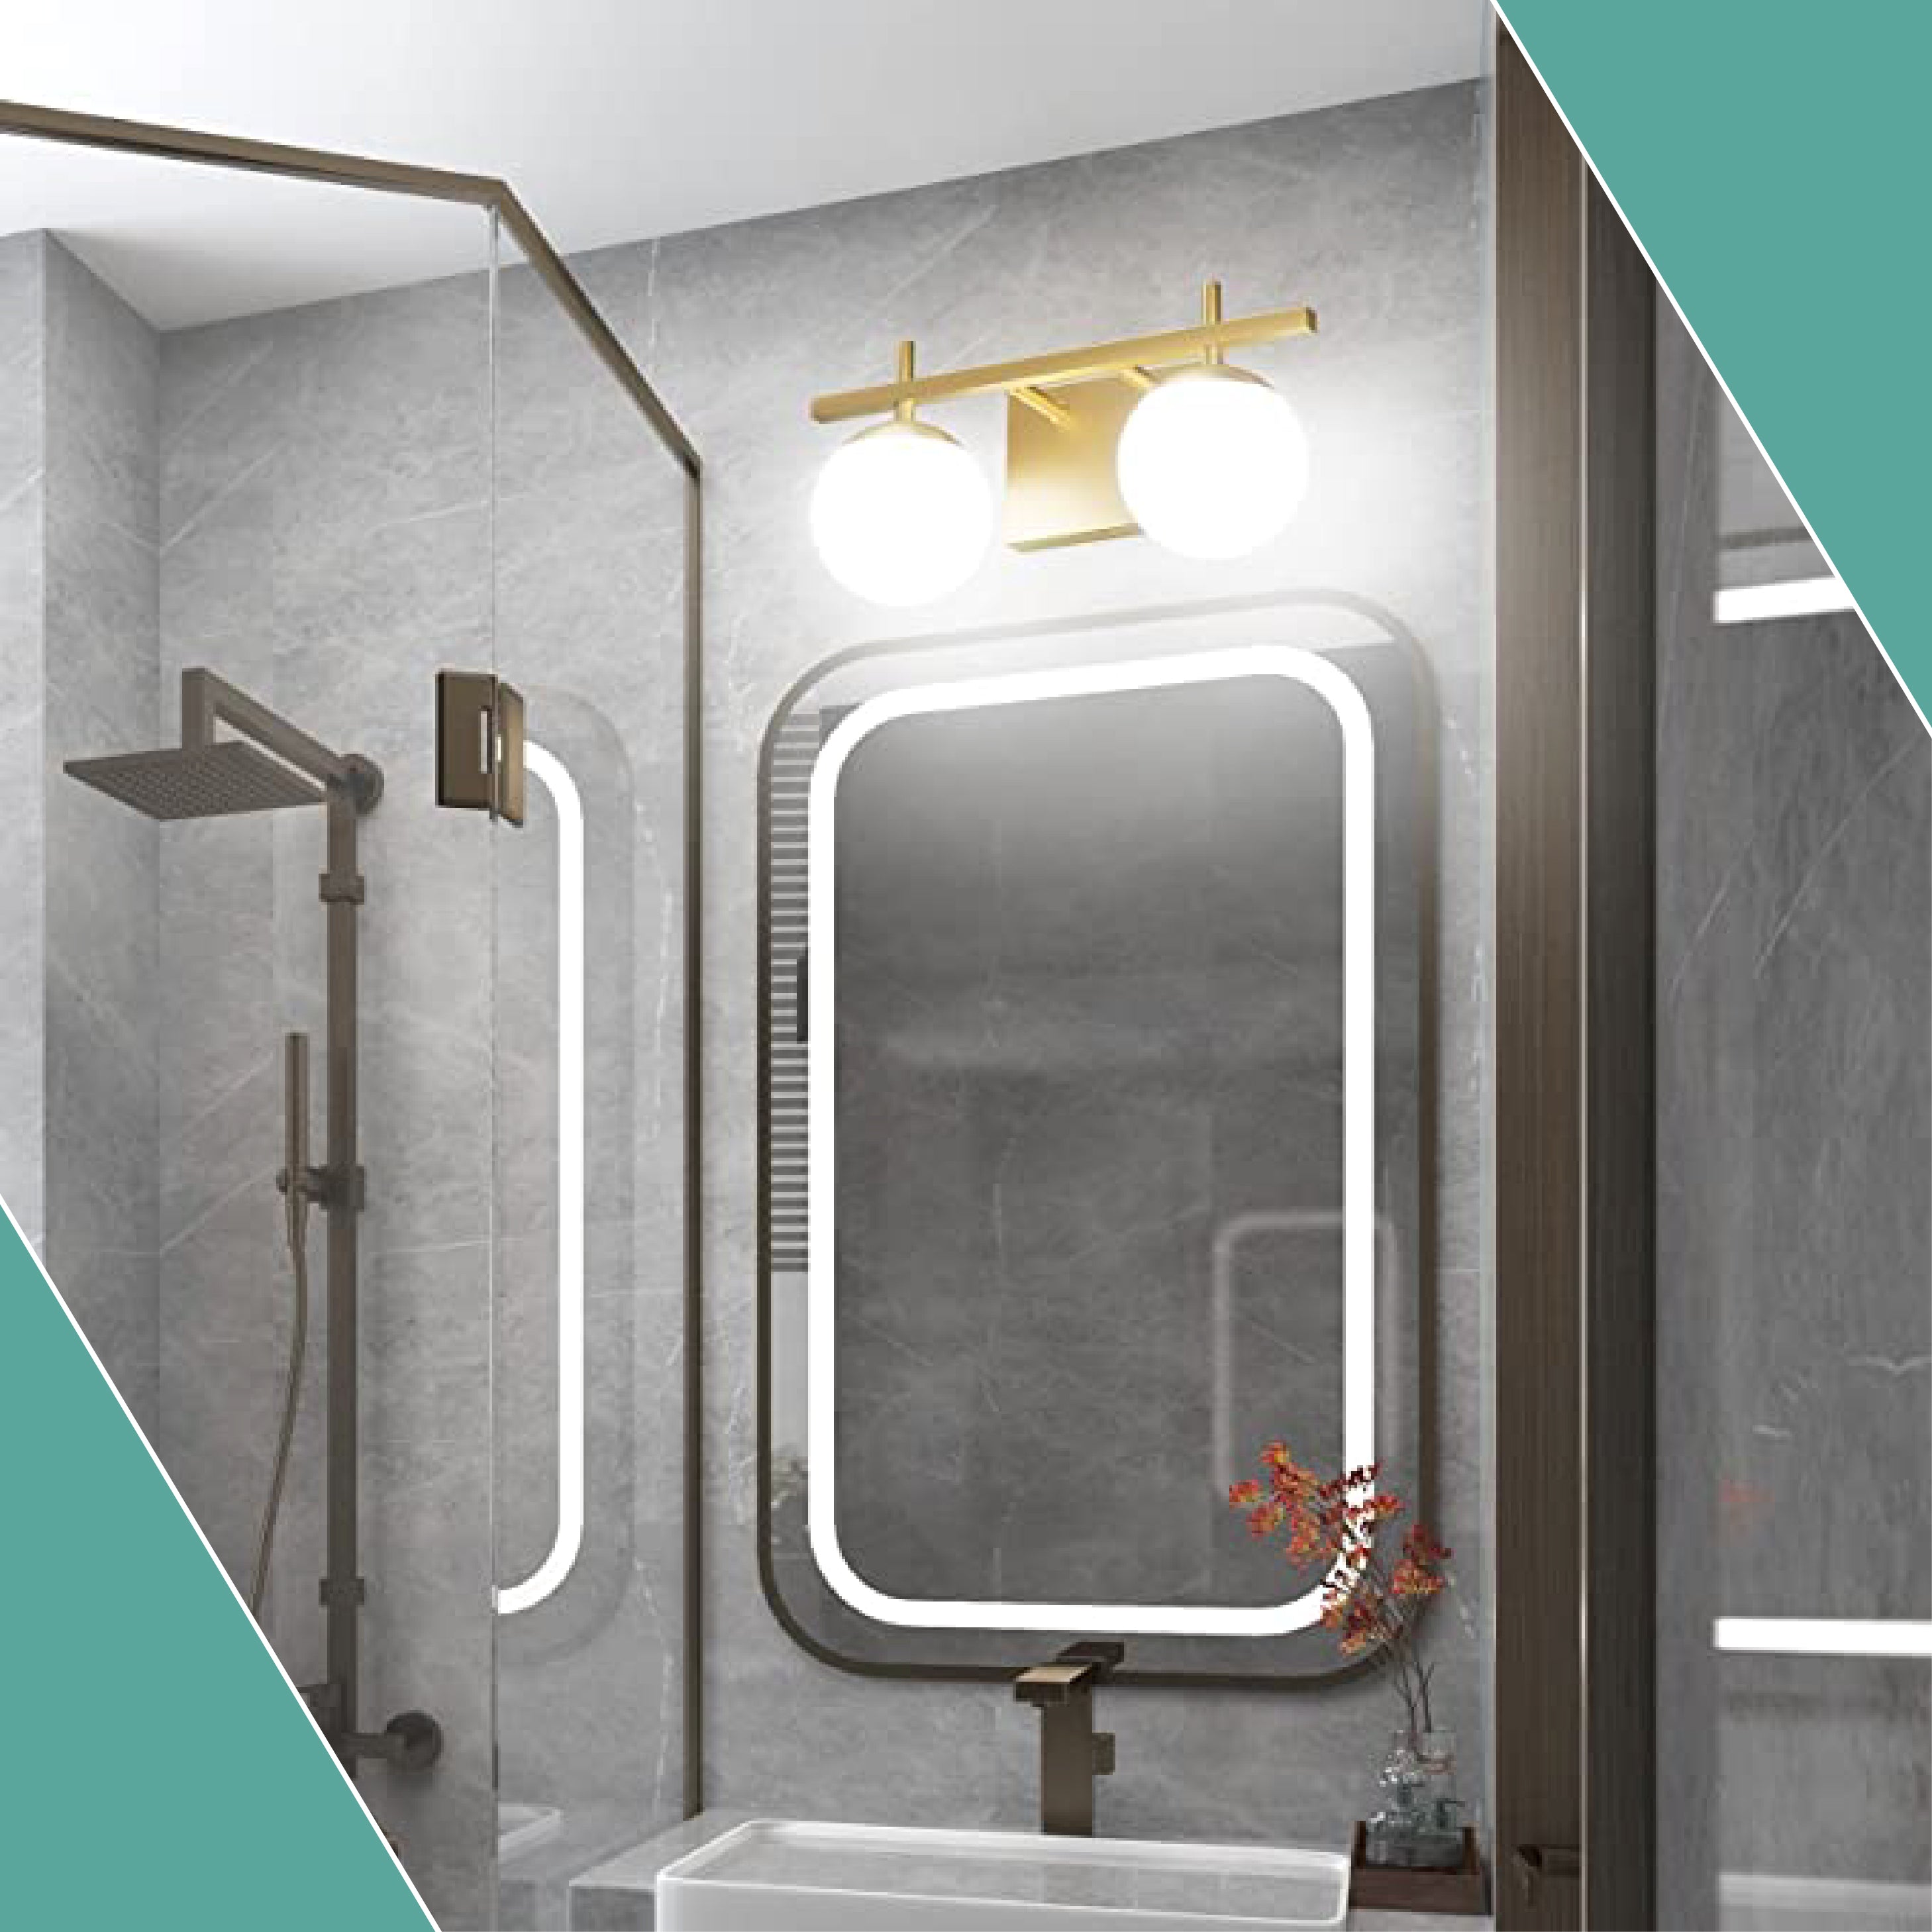 2-Light  bathroom light fixtures gold wall sconces without electricity Glass & Metal bathroom vanity light fixtures